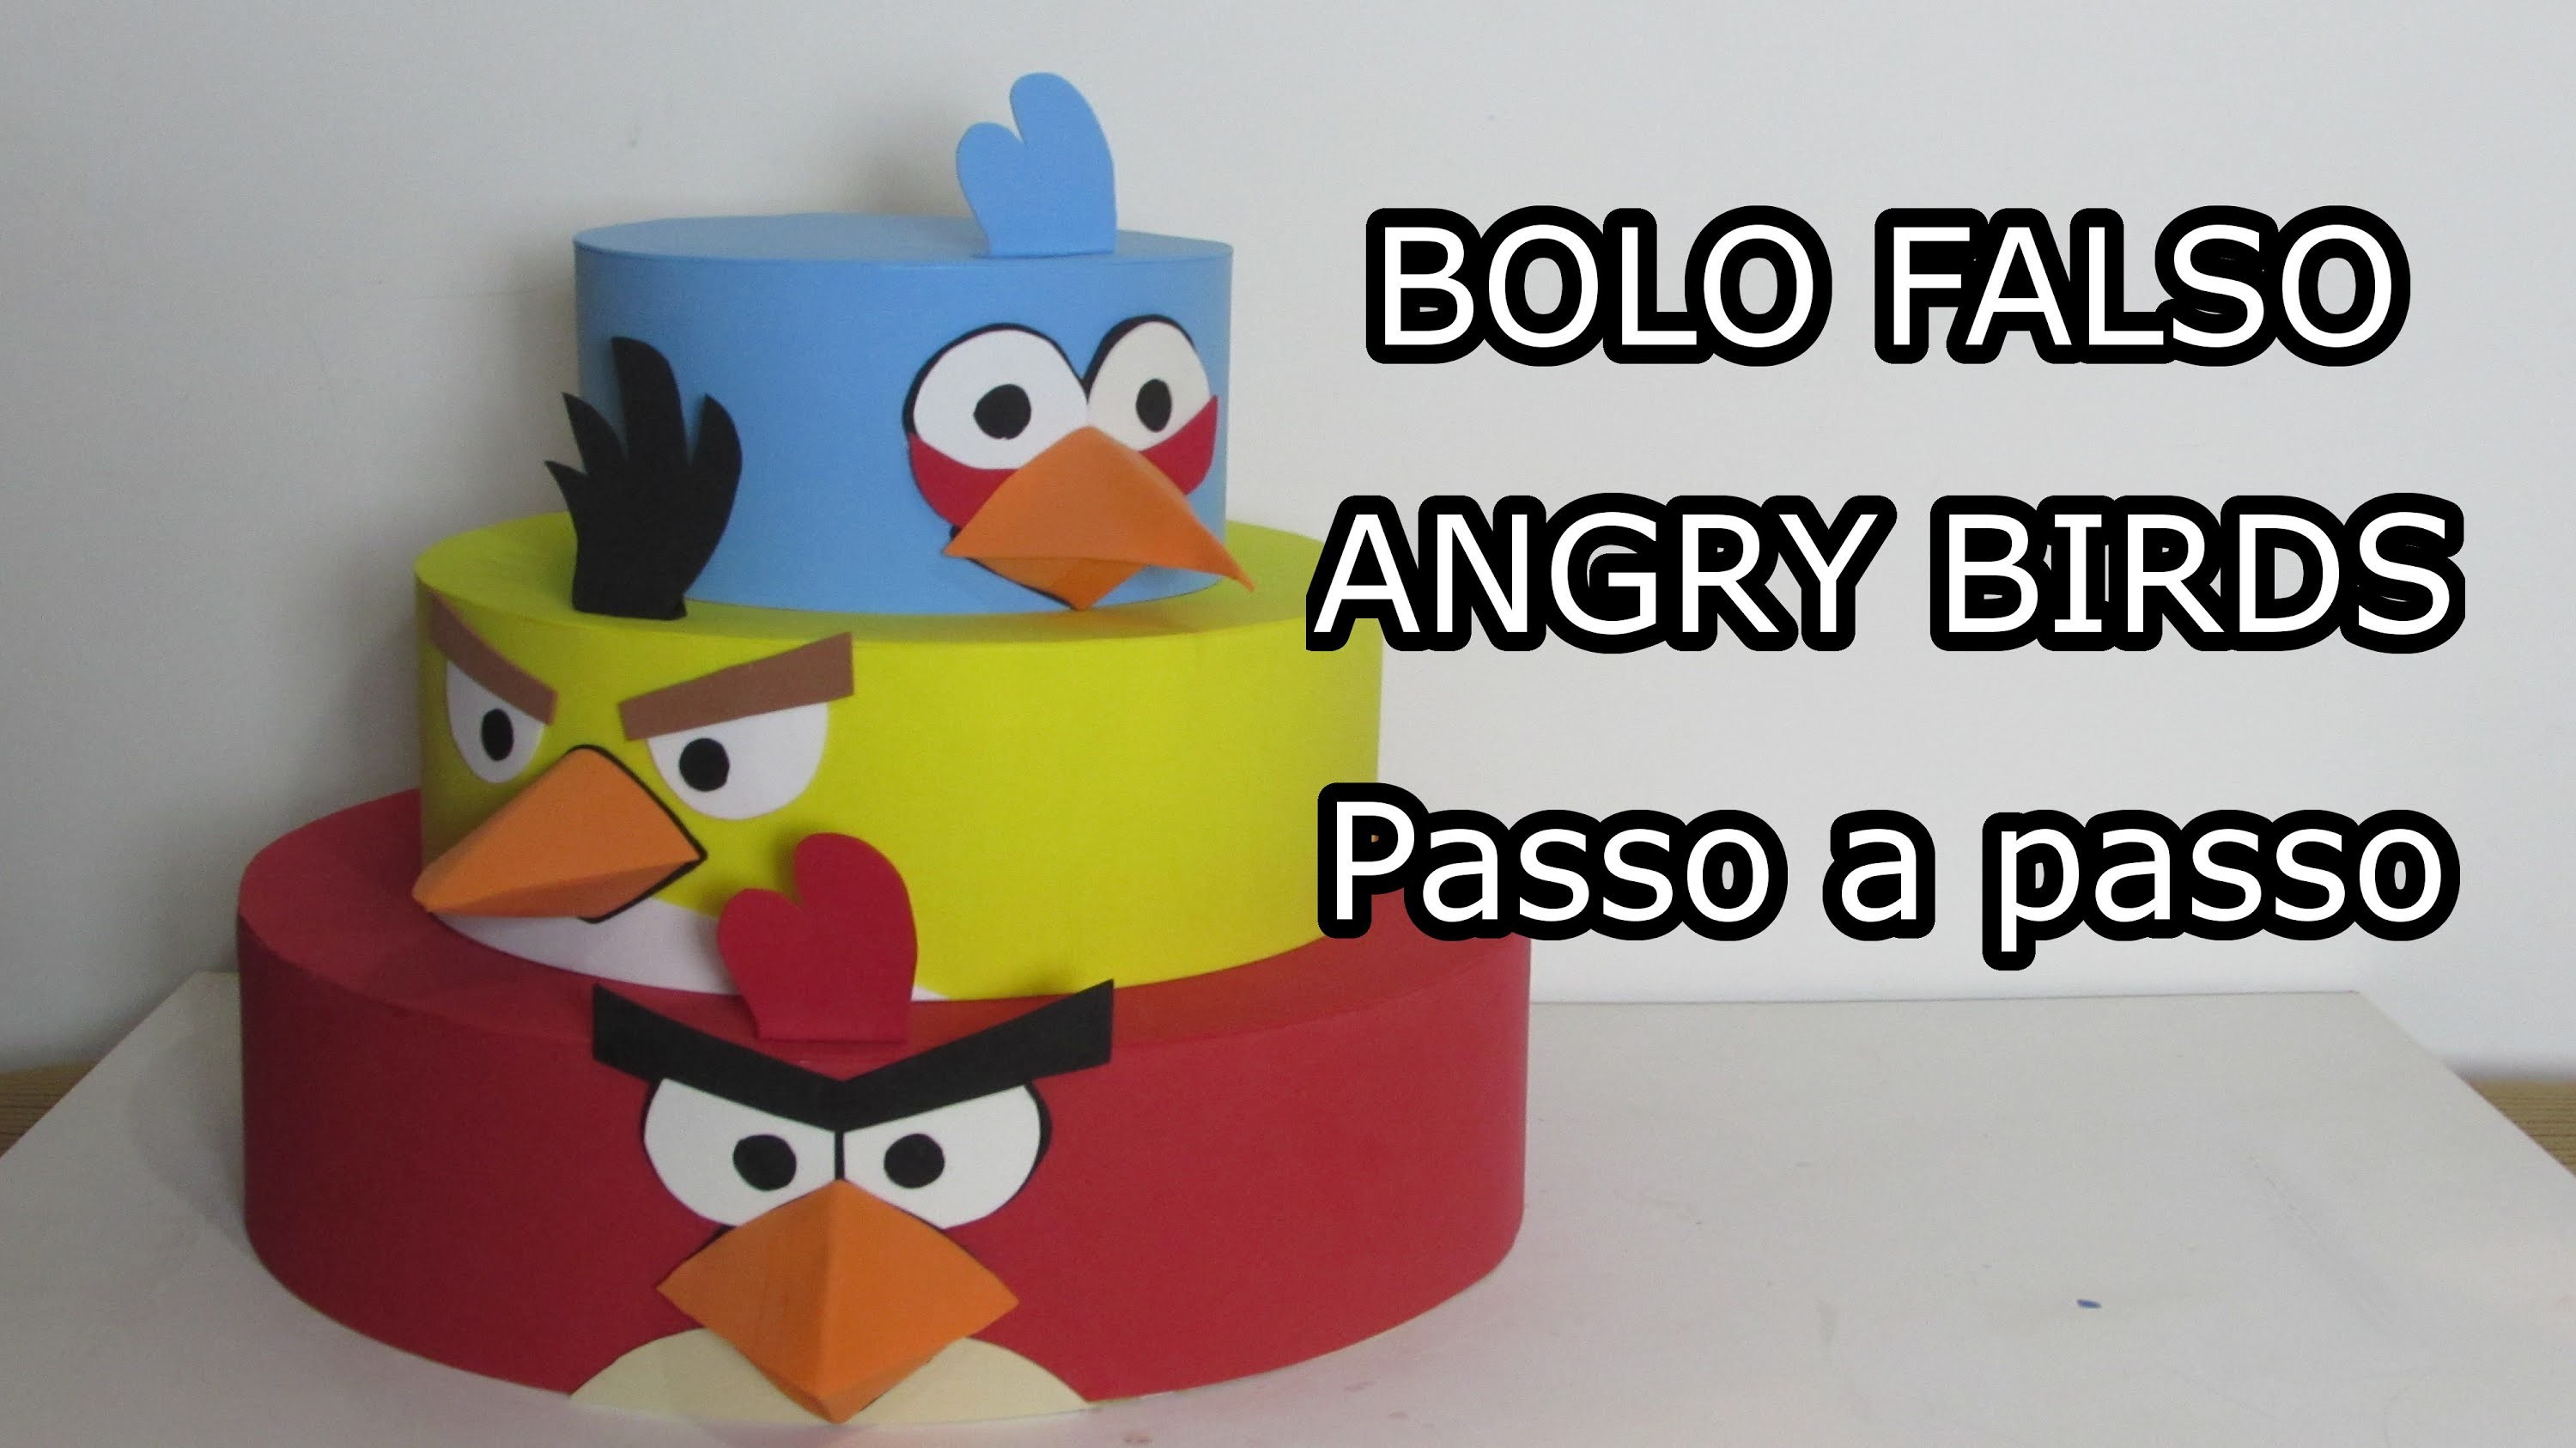 Bolo Falso ANGRY BIRDS Passo a passo